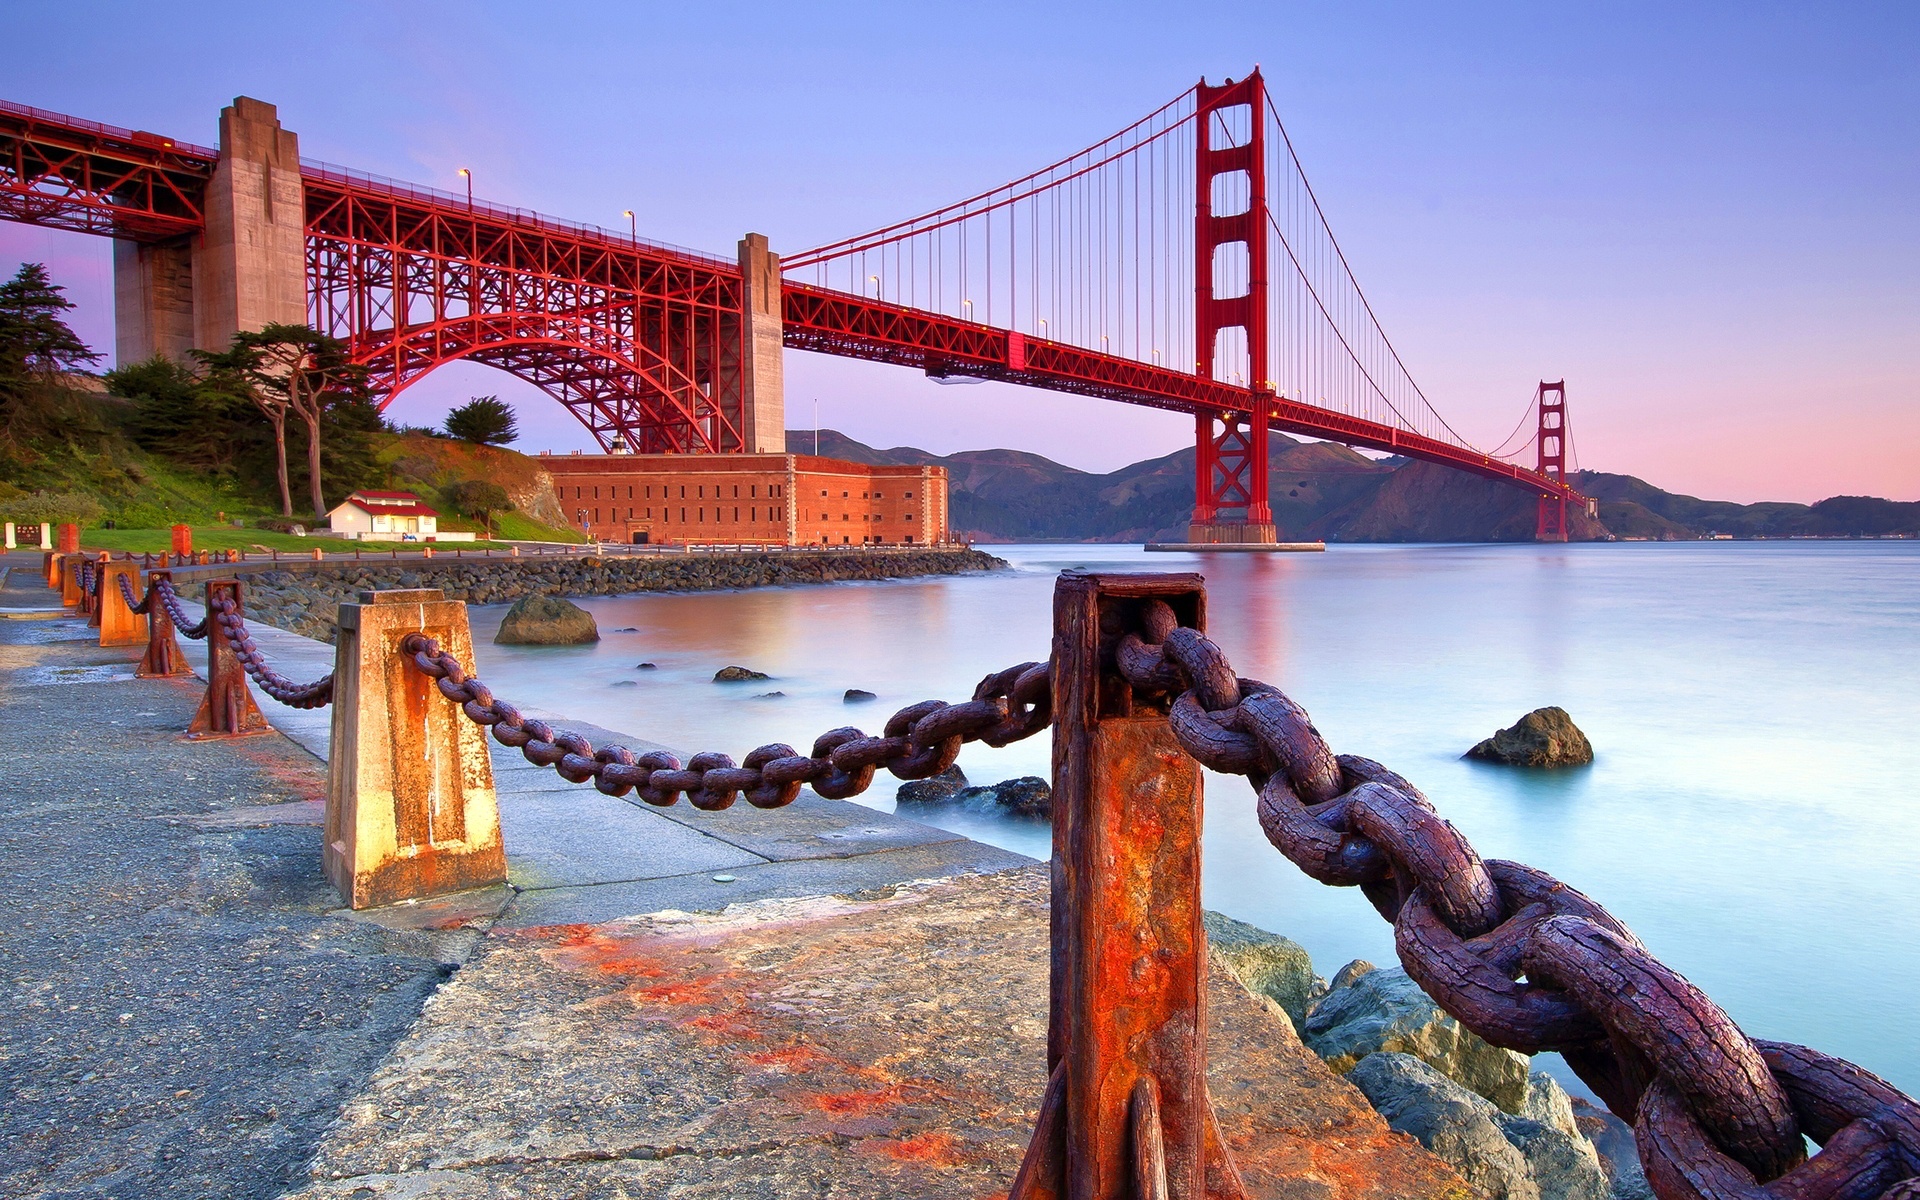 Golden Gate Bridge San Francisco Wallpaper